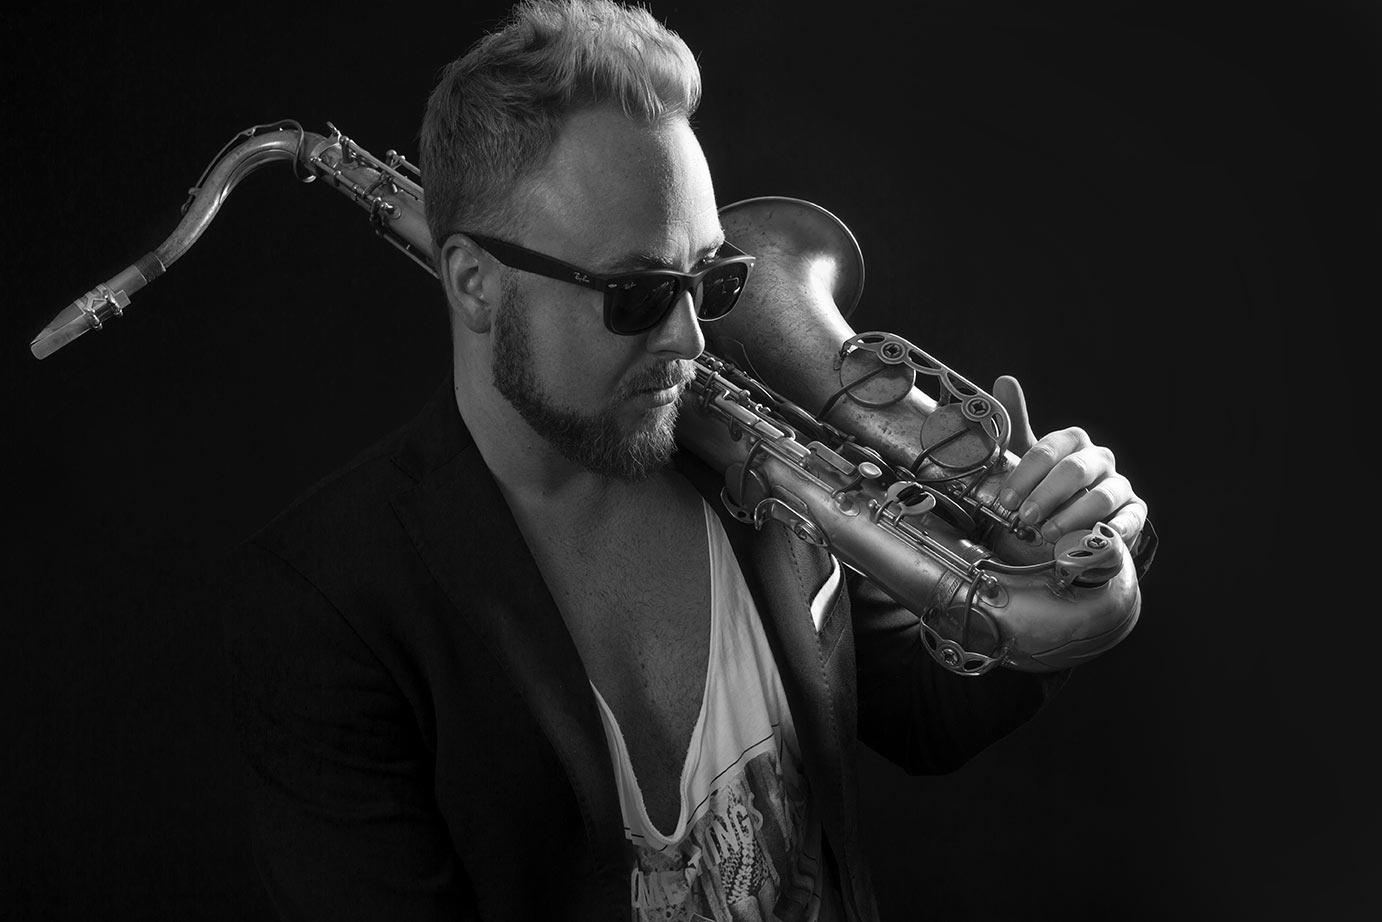 Saxophonist MAX VARSHAVSKY